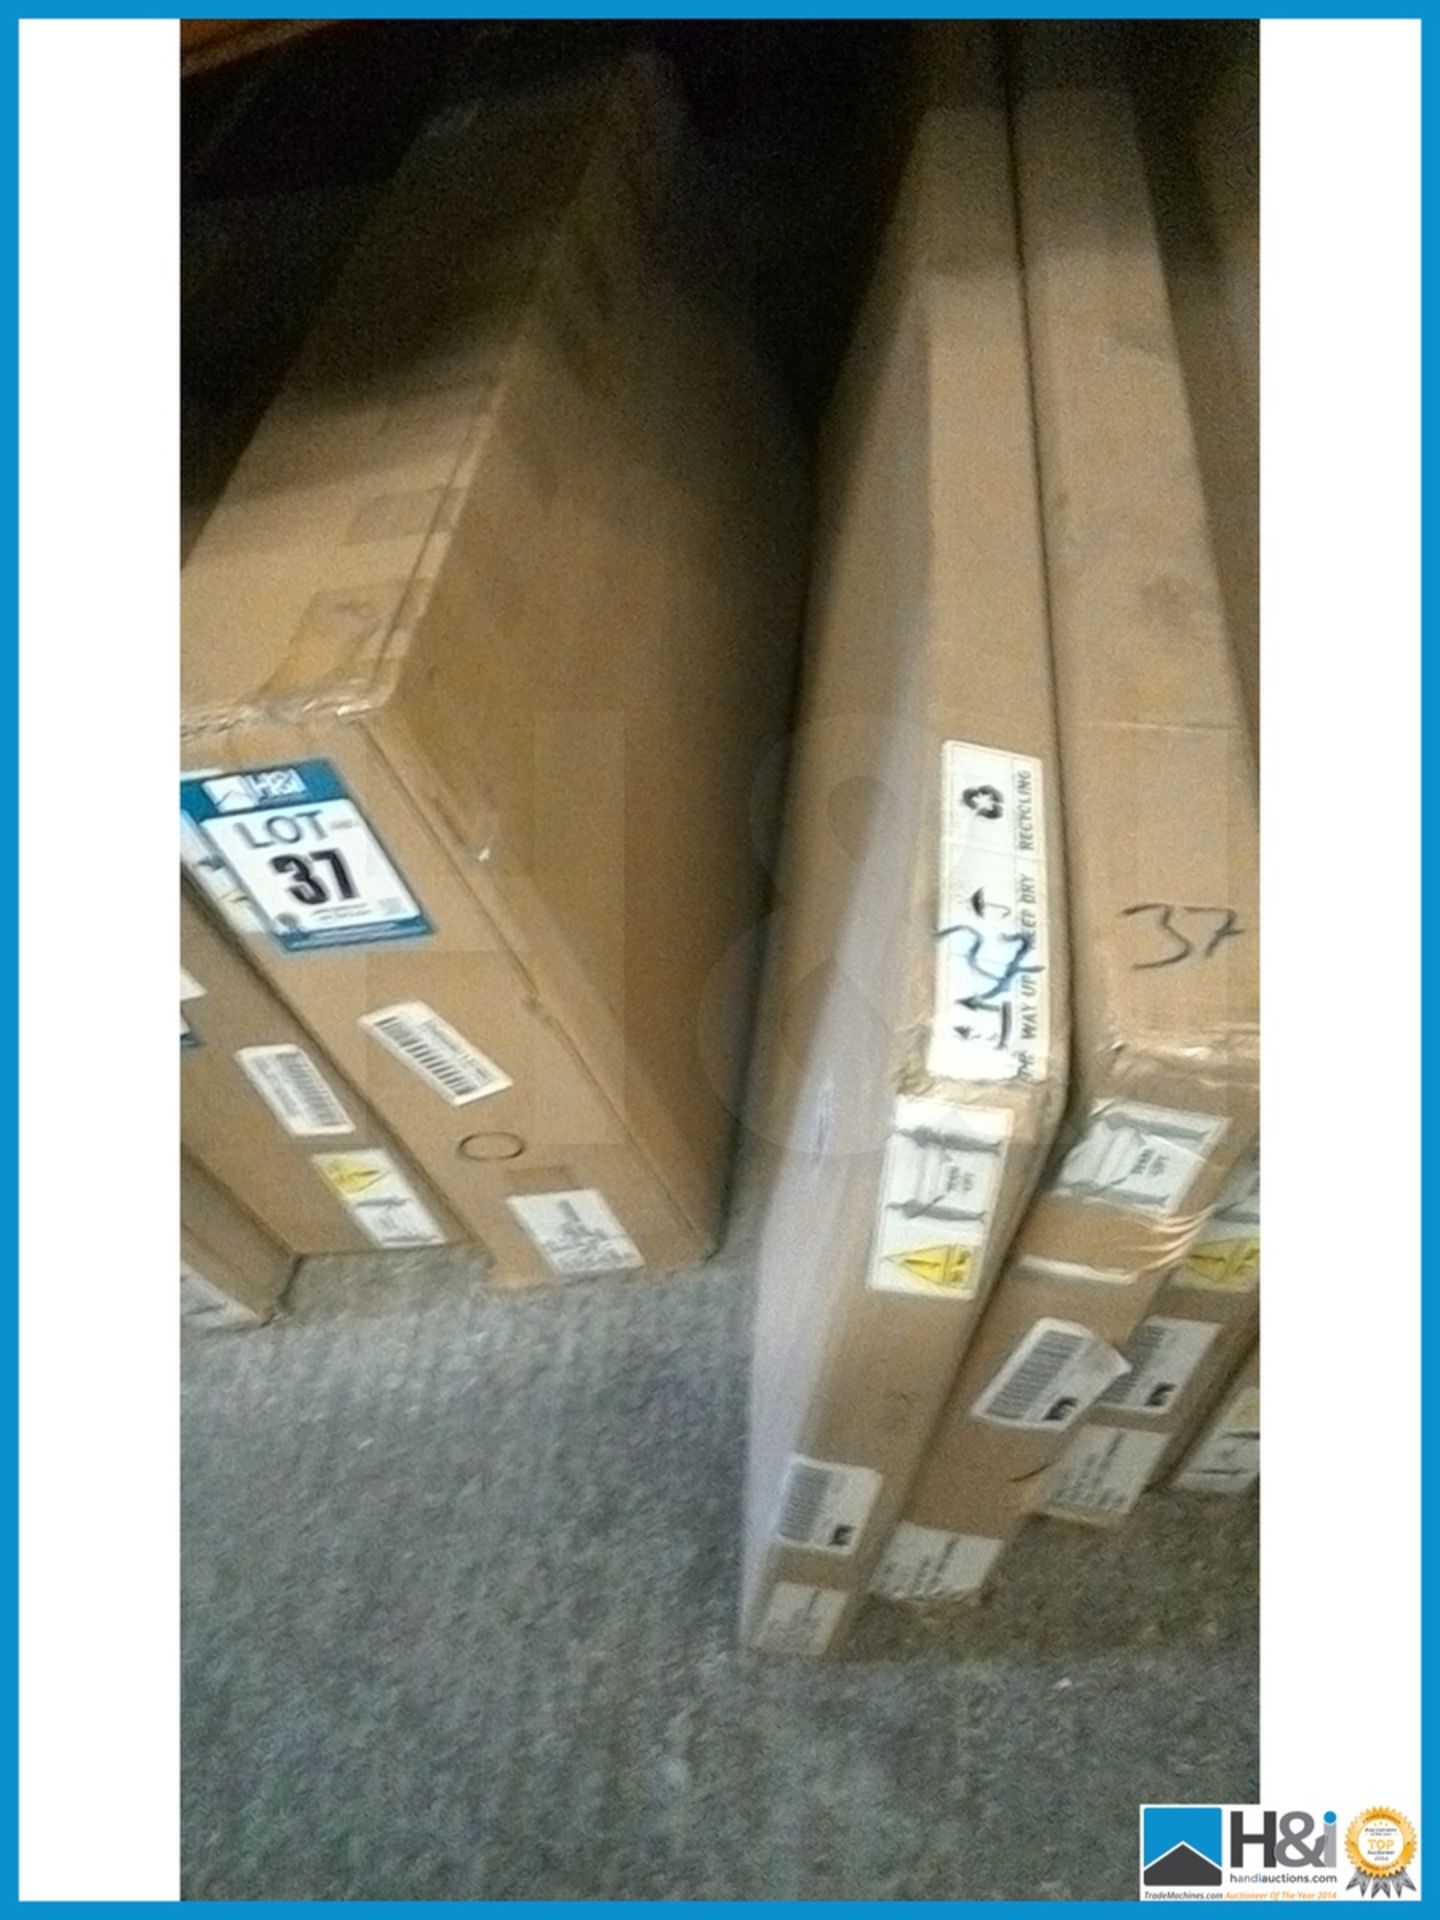 NEW IN BOX PERU 4DOOR 4DRAWER WARDROBE [WHITE] 182 x 200 x 52cm RRP £493 Appraisal: Viewing - Image 2 of 2